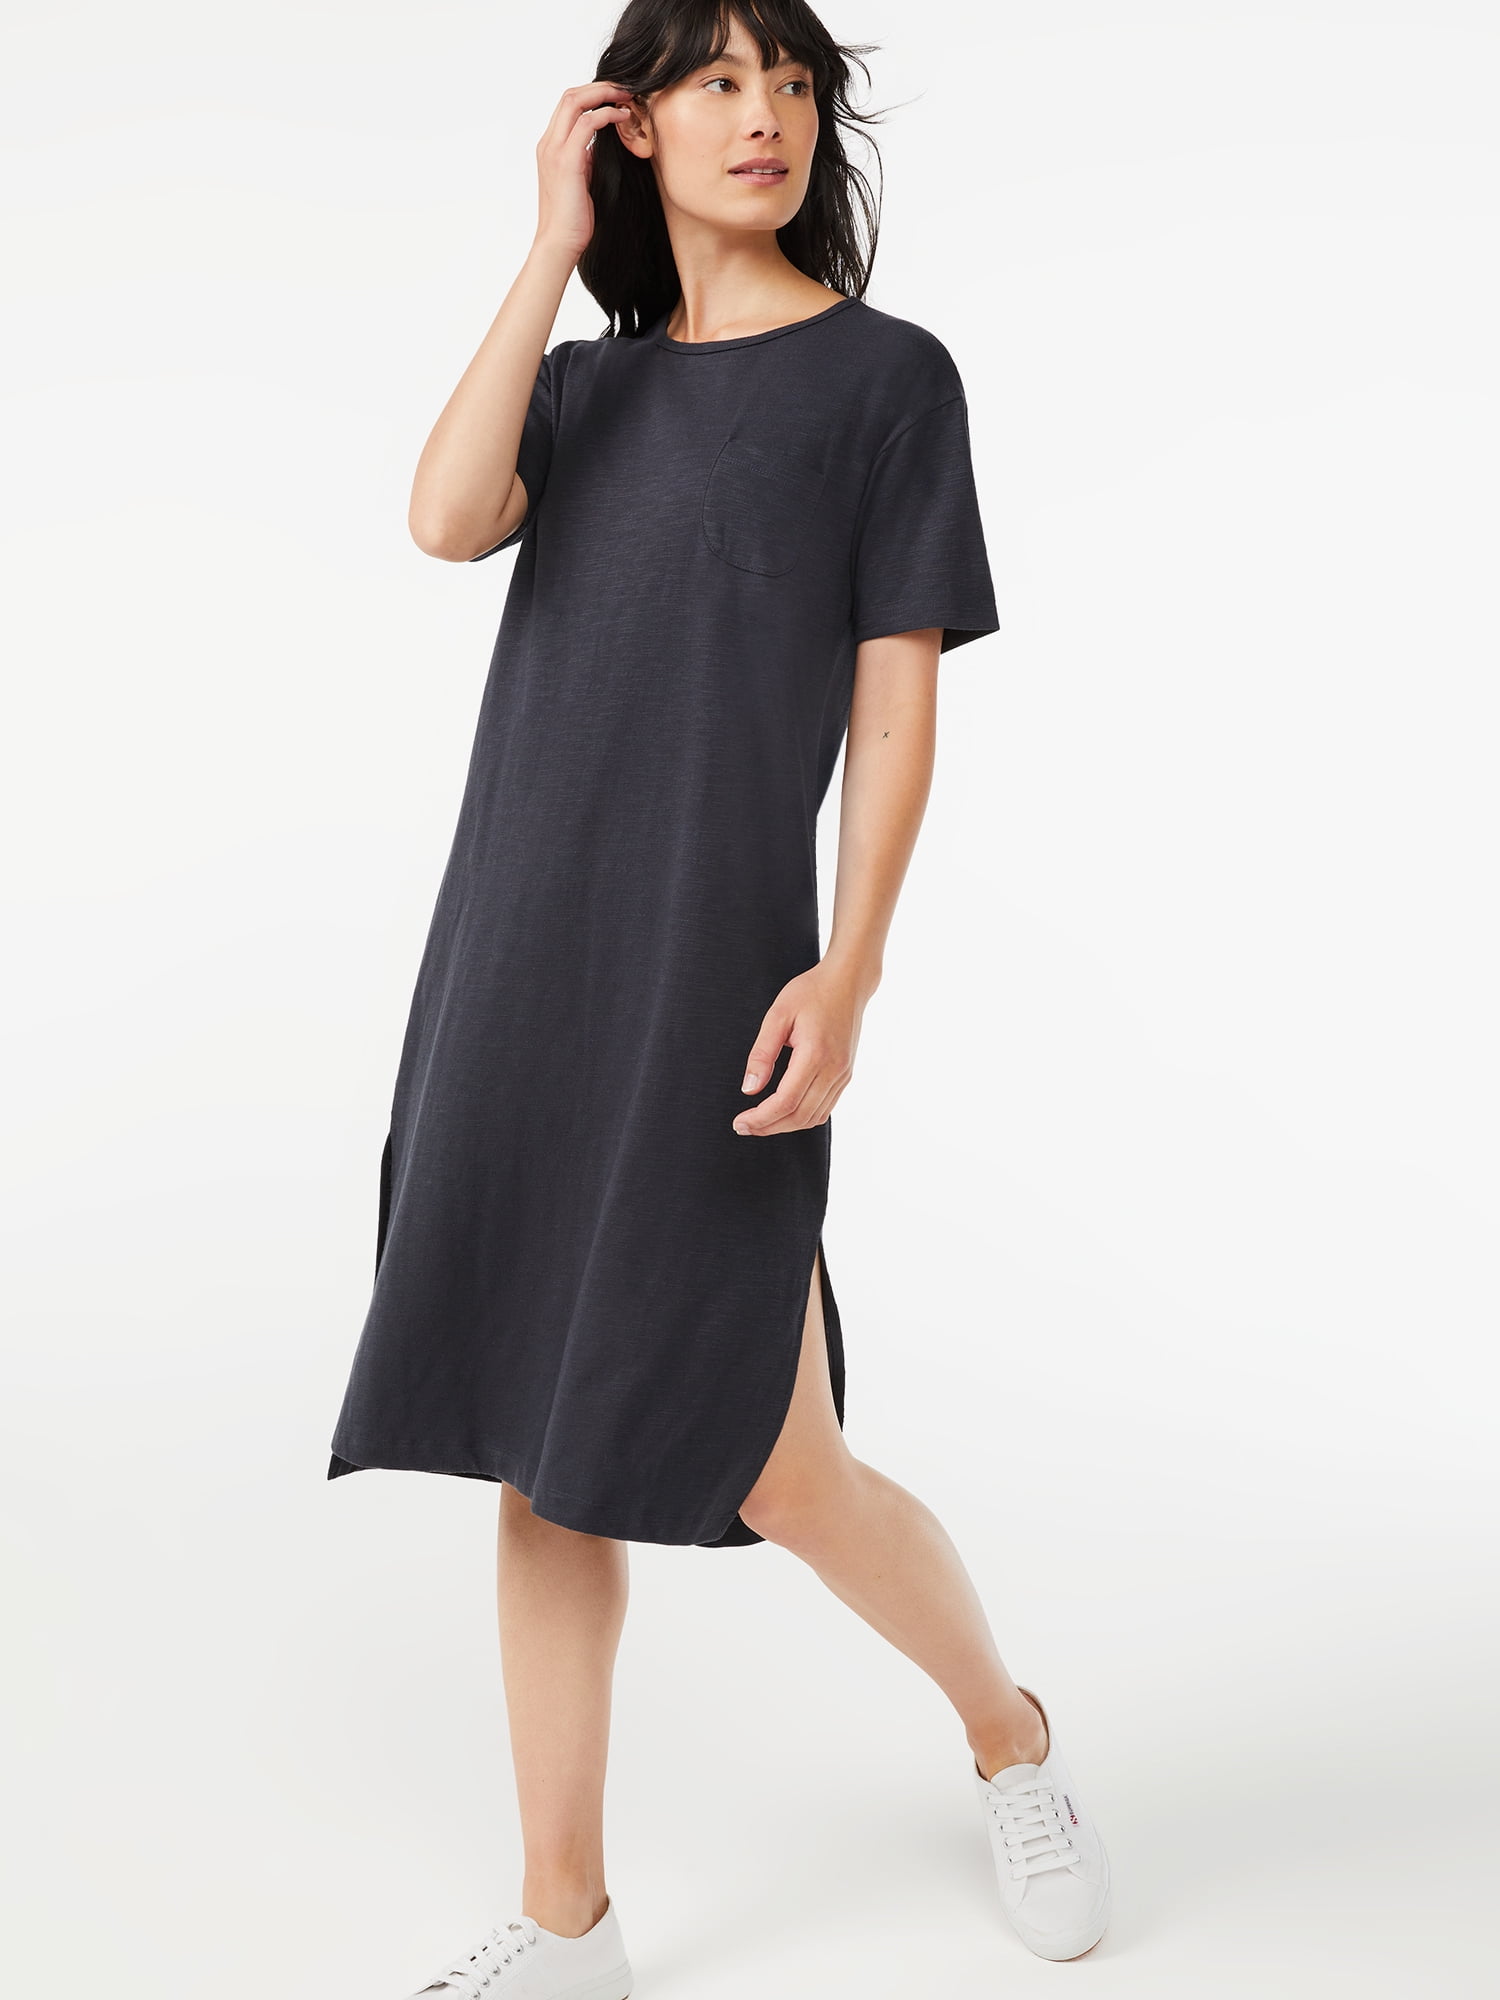 Free Assembly Women's Pocket Midi Dress with Short Sleeves - Walmart.com